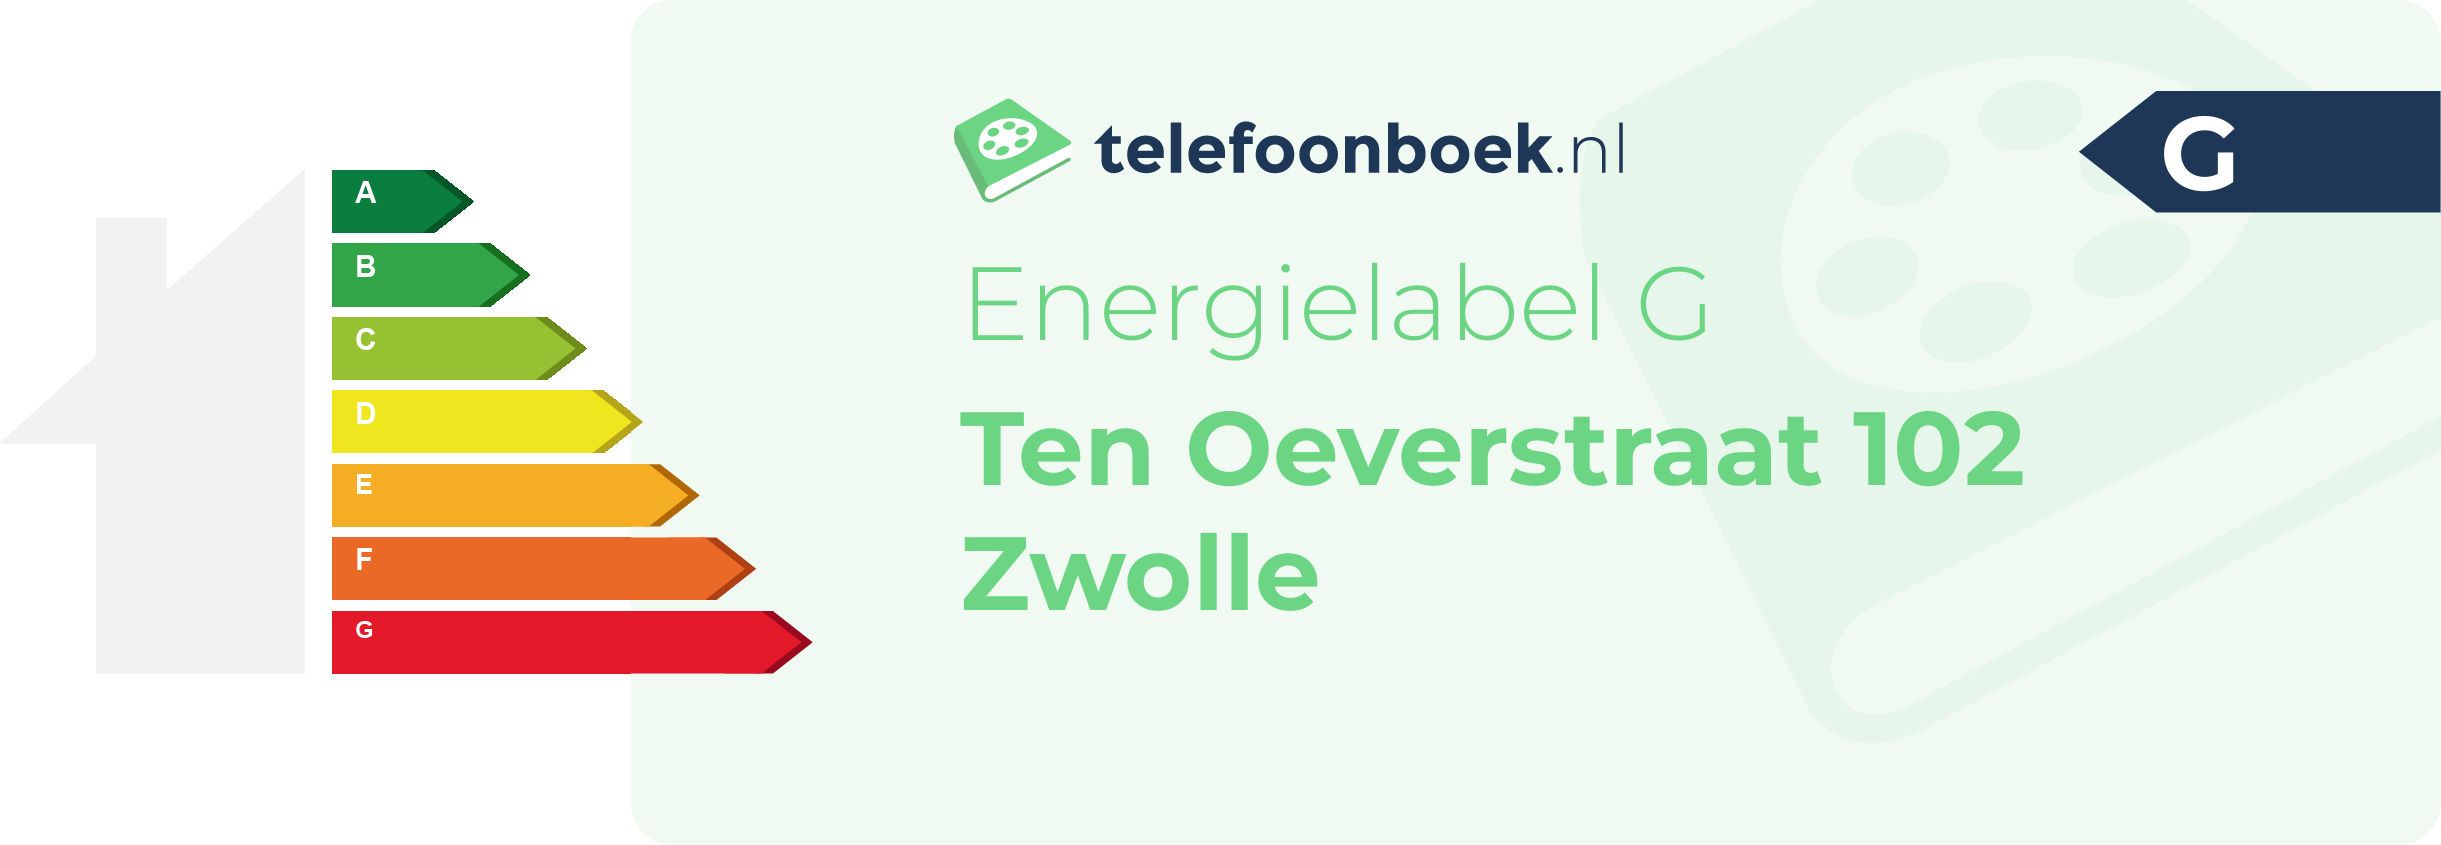 Energielabel Ten Oeverstraat 102 Zwolle